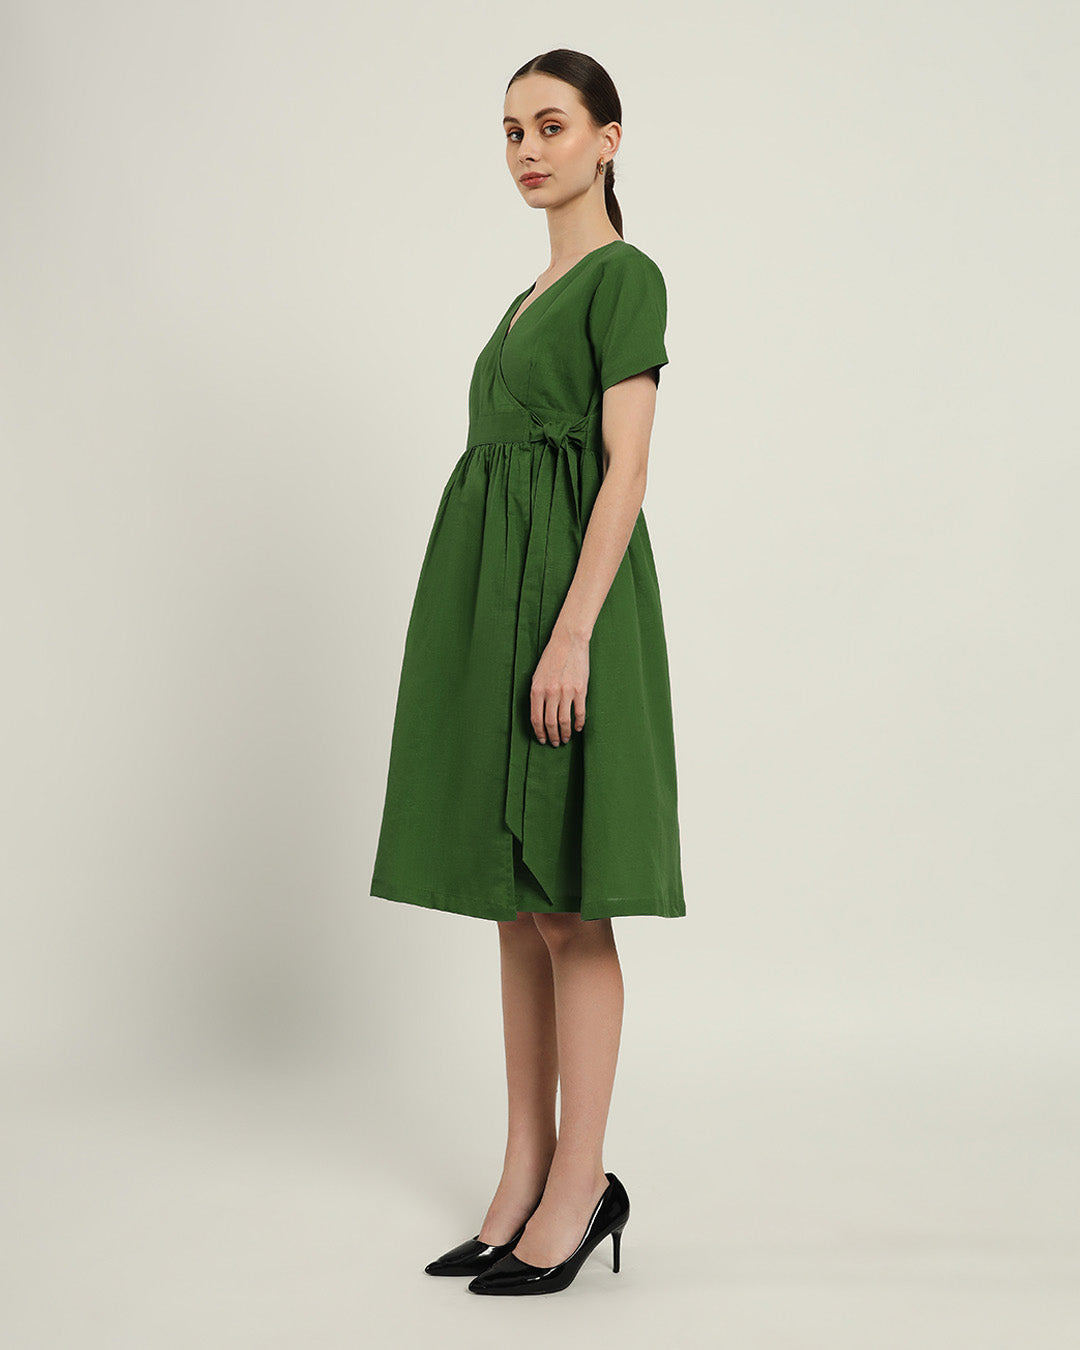 The Miyoshi Emerald Dress